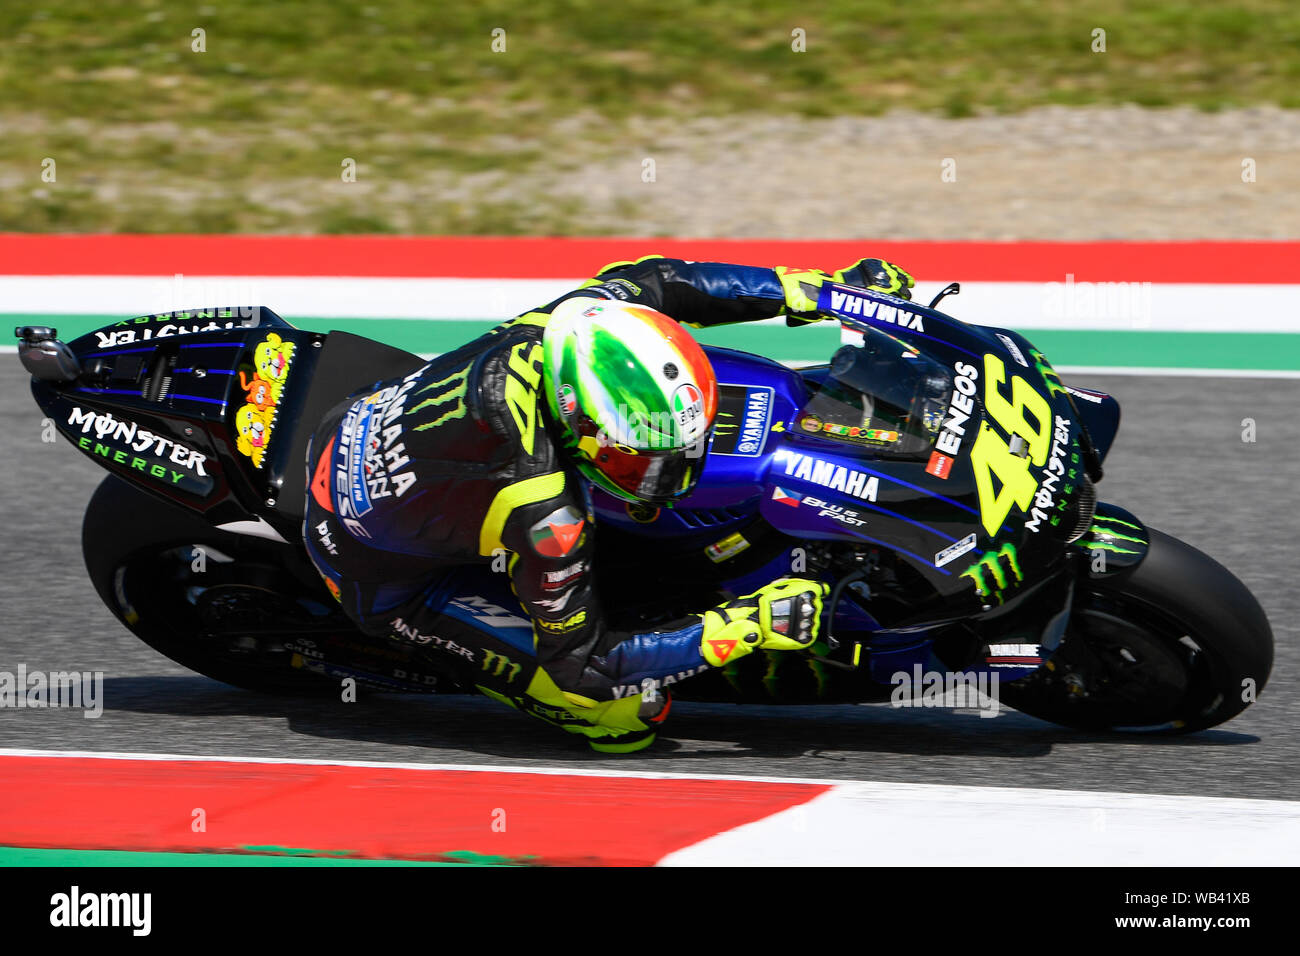 46 VALENTINO ROSSI DURING LA FP3 during Grand Prix Of Italy 2019 - Mugello - Fp3, Mugello, Italy, 01 Jun 2019, Motors MotoGP Stock Photo